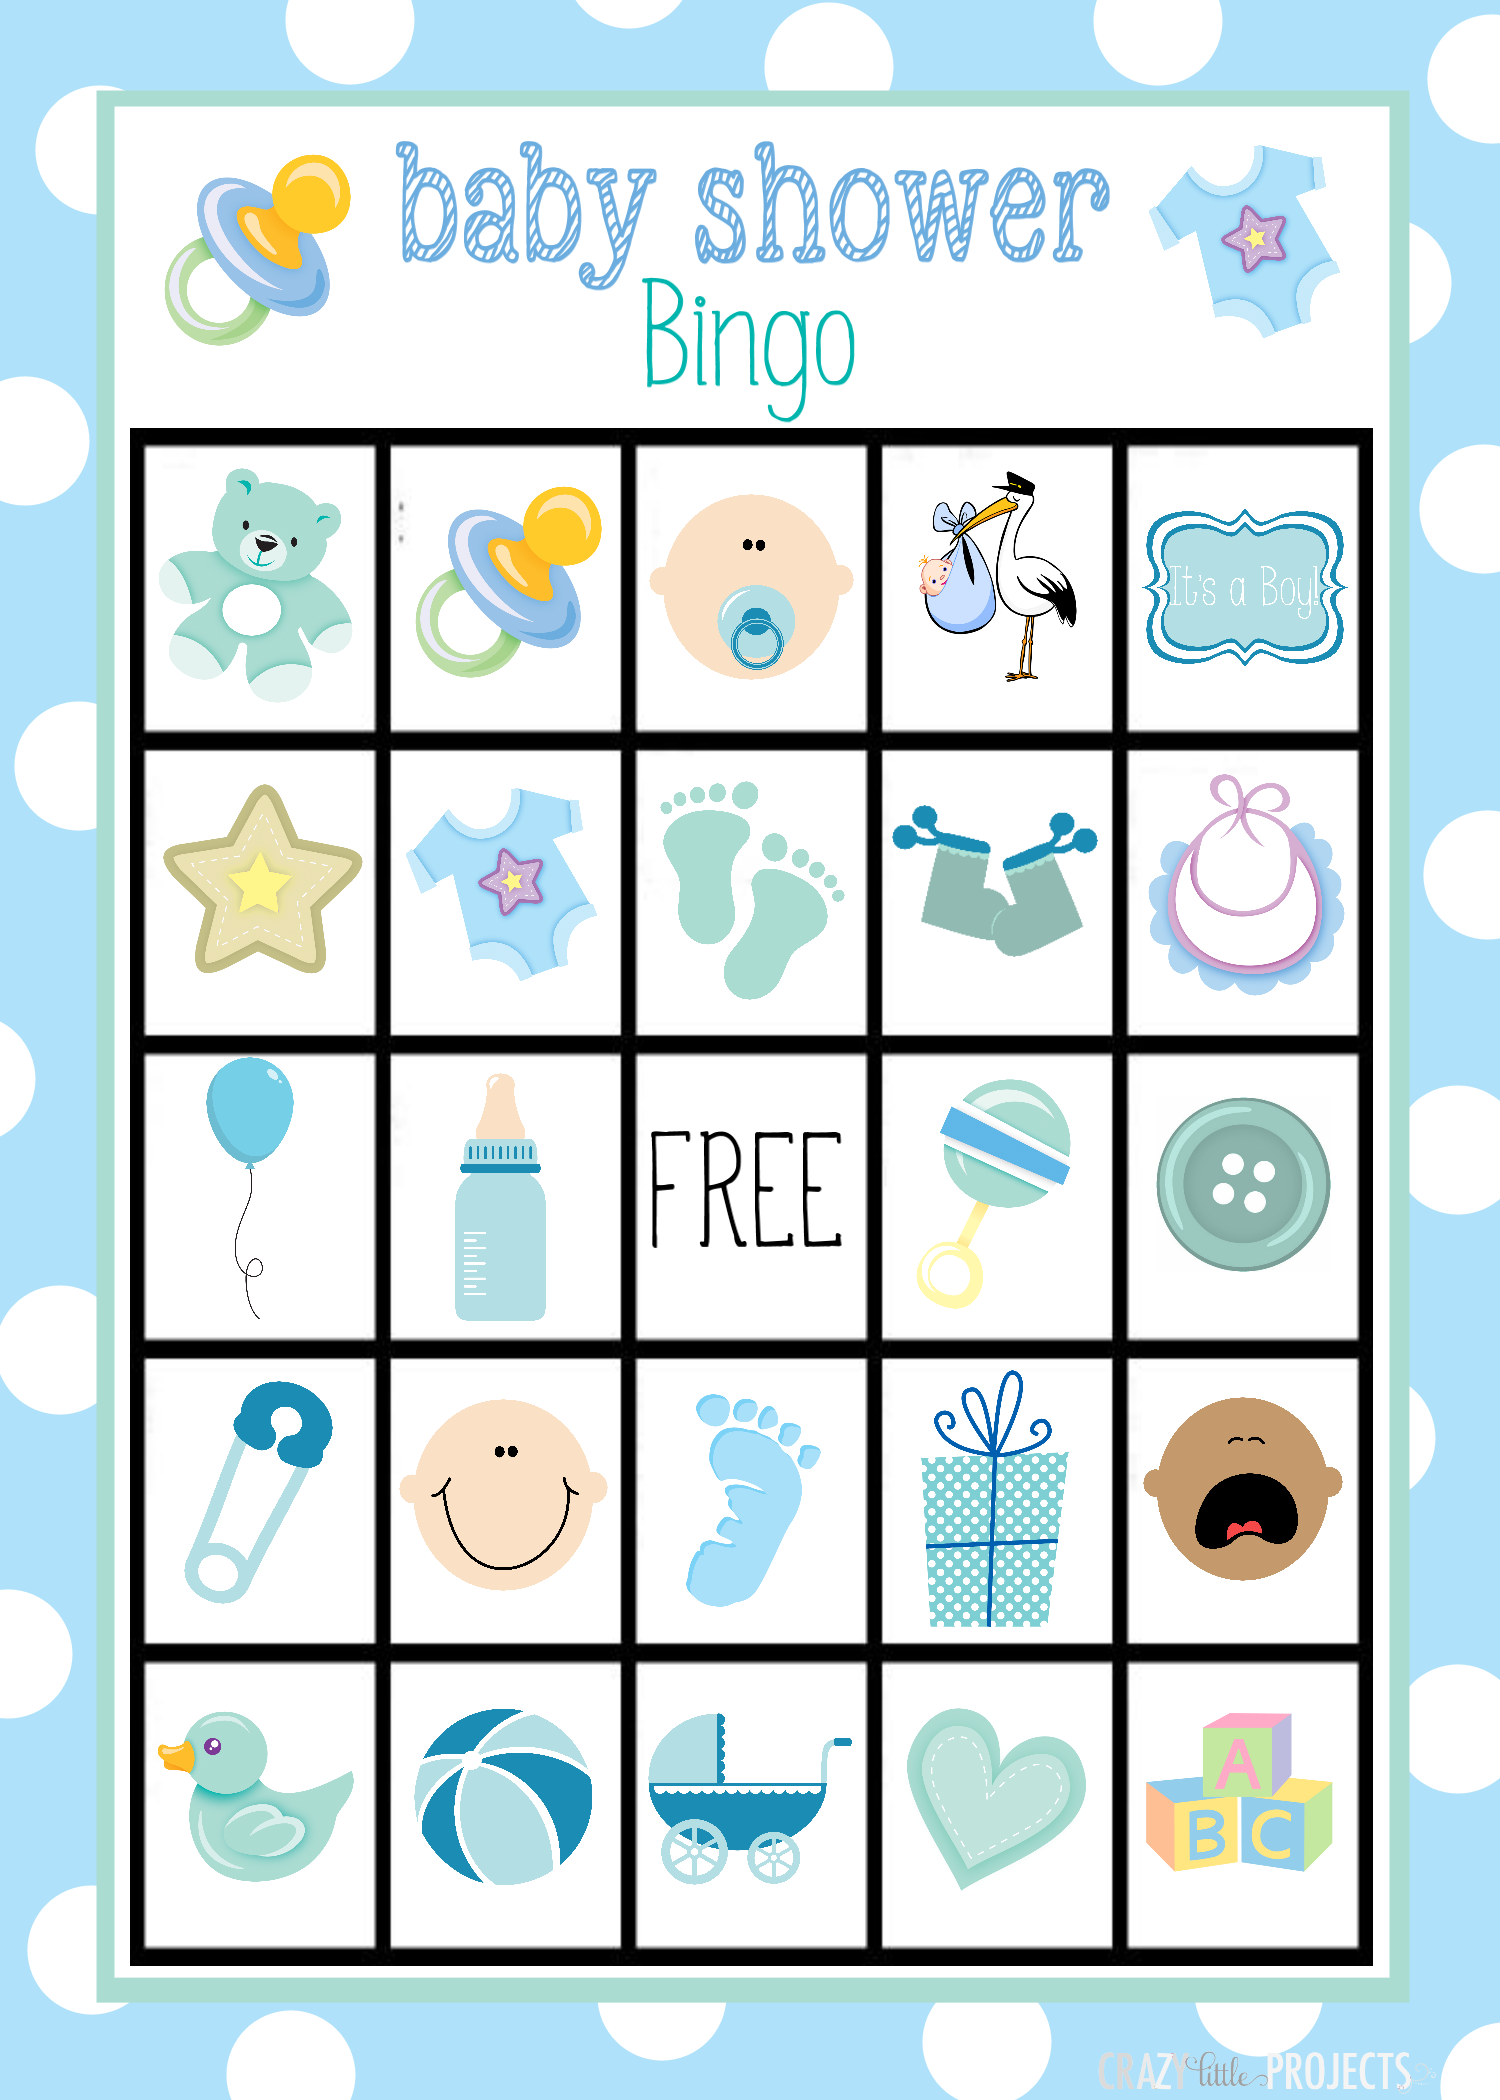 Baby shower bingo template free